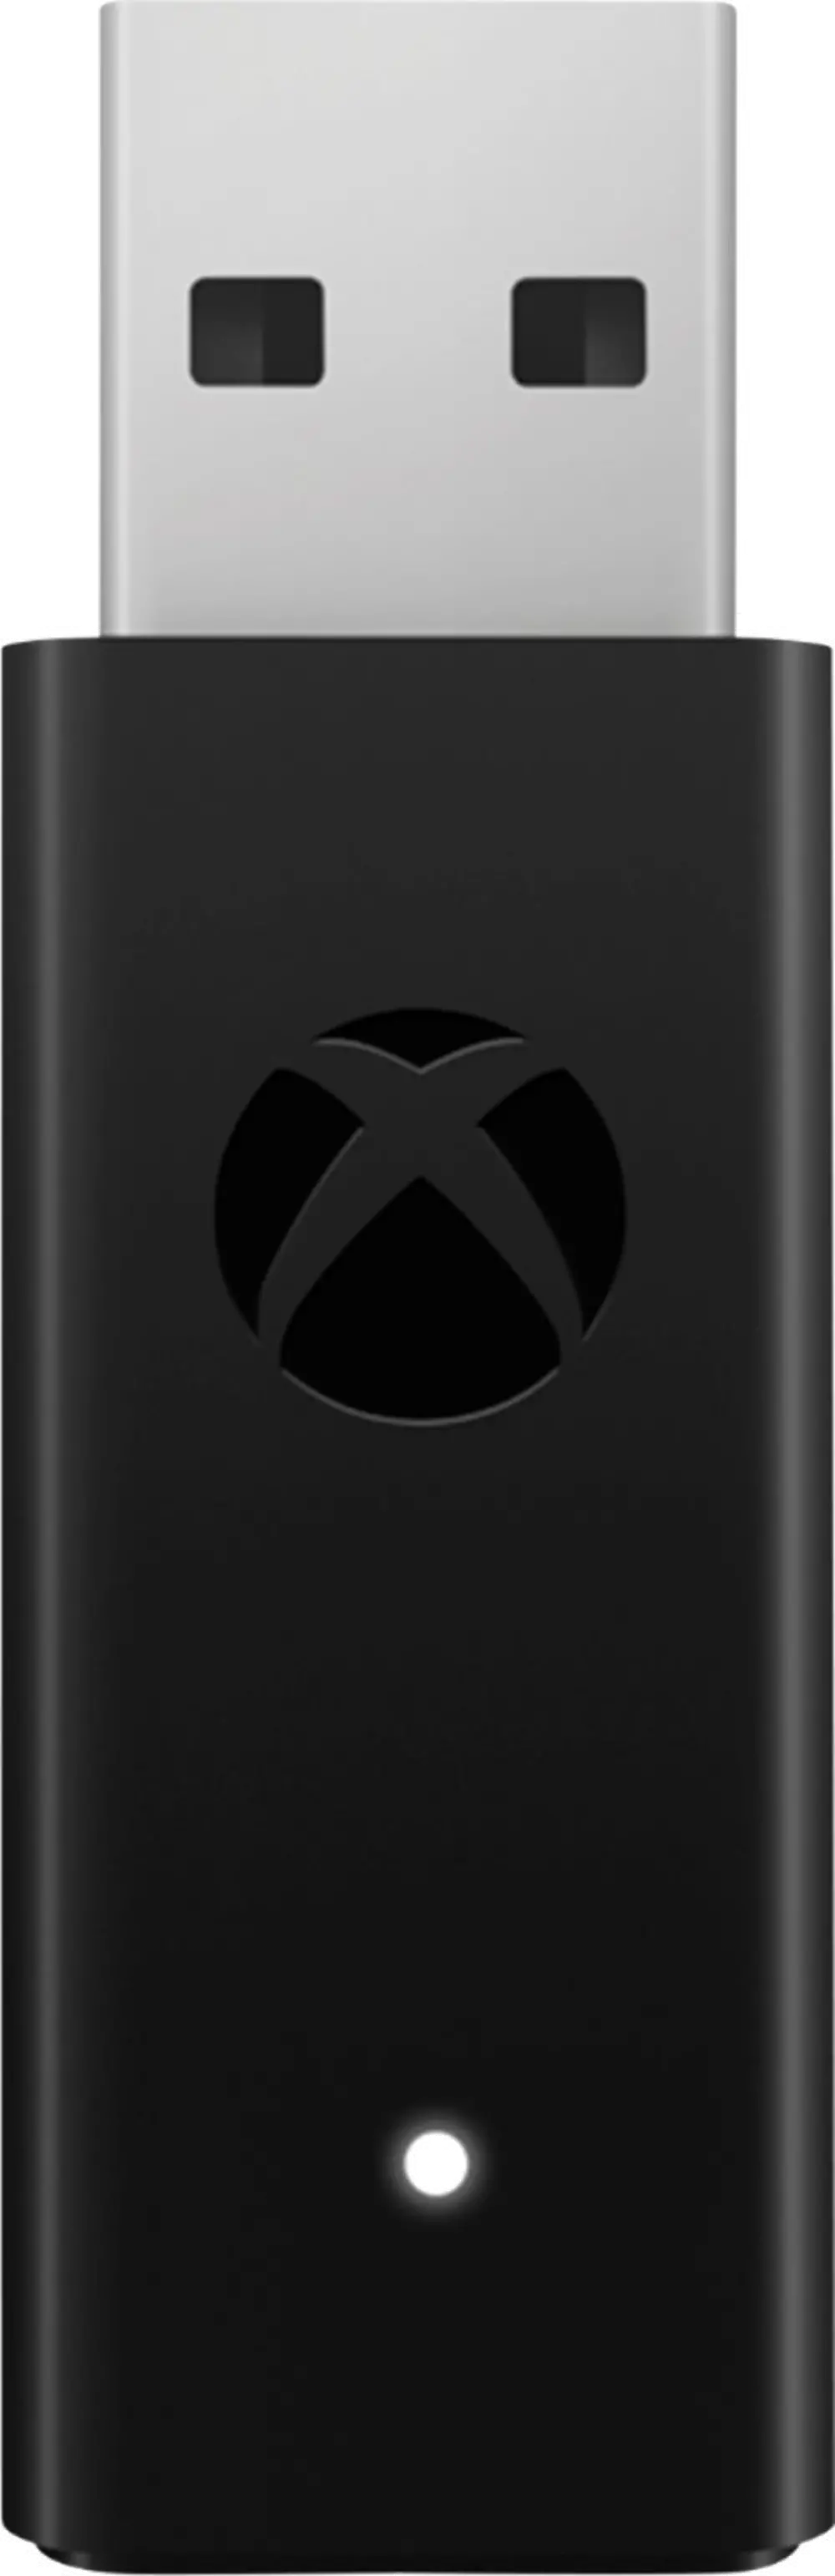 6HN-00002/XB1,ADAPT Xbox One Wireless Adapter for Windows 10-1